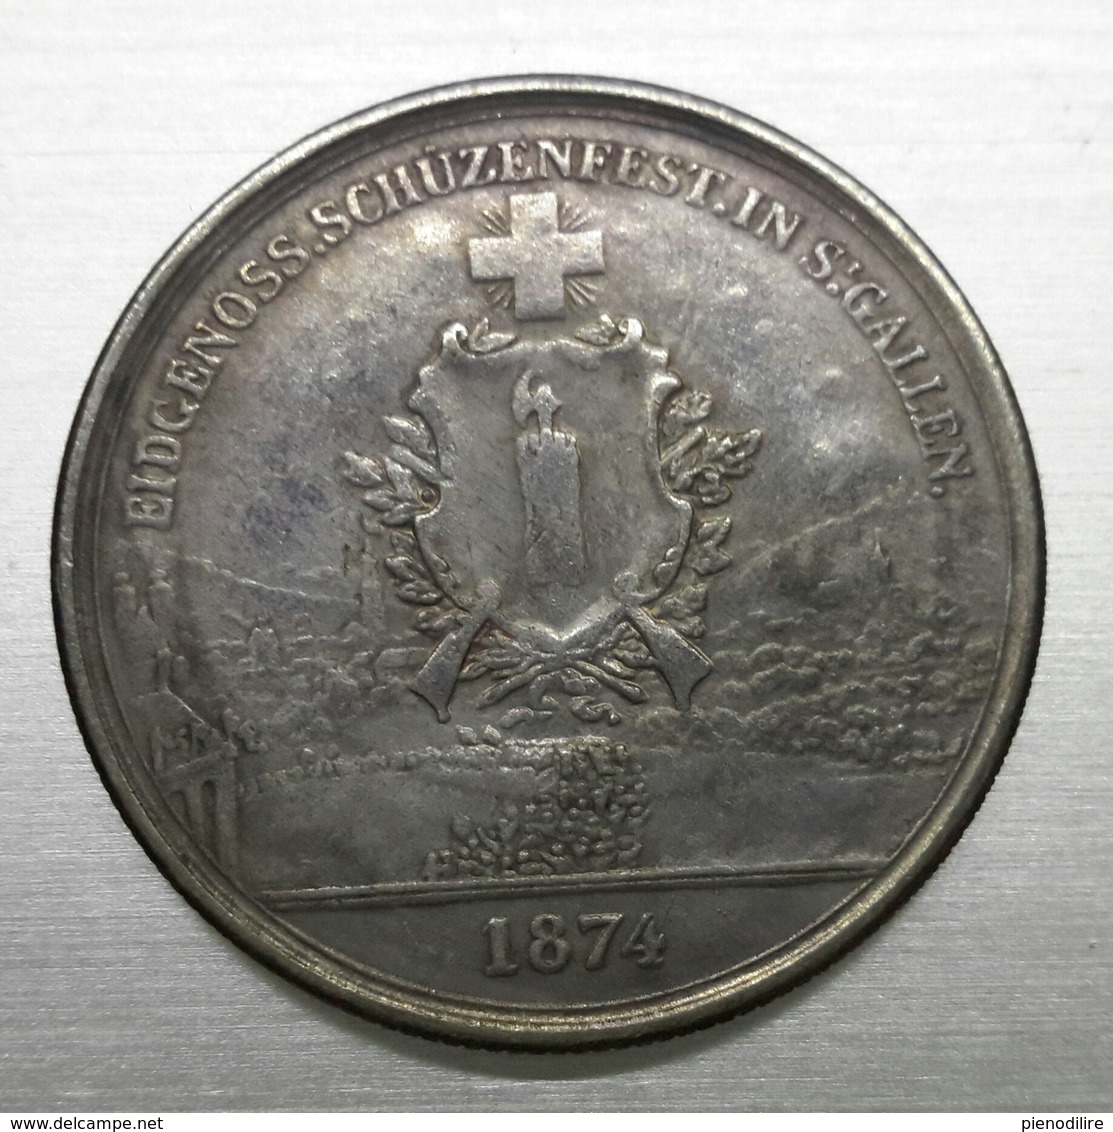 Riproduzione Di Moneta, Commemorativa Eidgenoss Schuzenfest ST GALLEN 1874 (pos.A10.68) NO ARGENTO, FAKE, FALSE - Swasiland